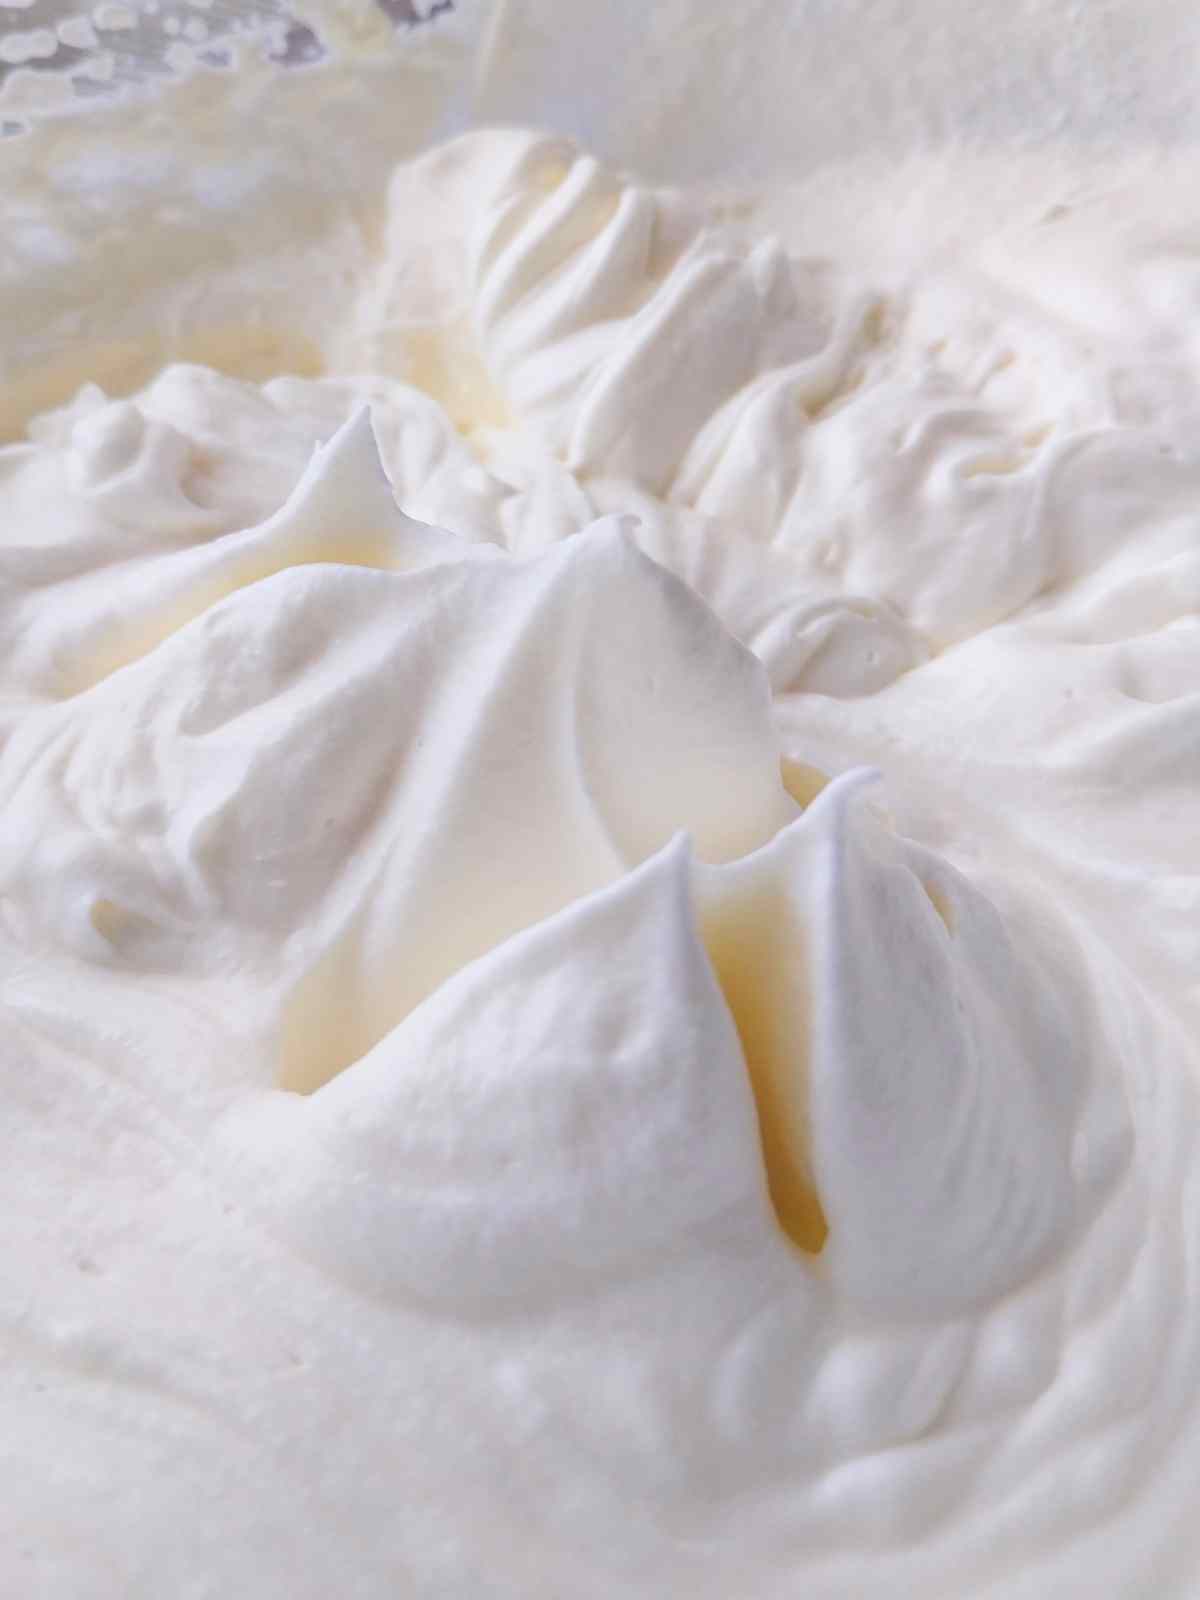 Stiff peaks in the whipping cream.